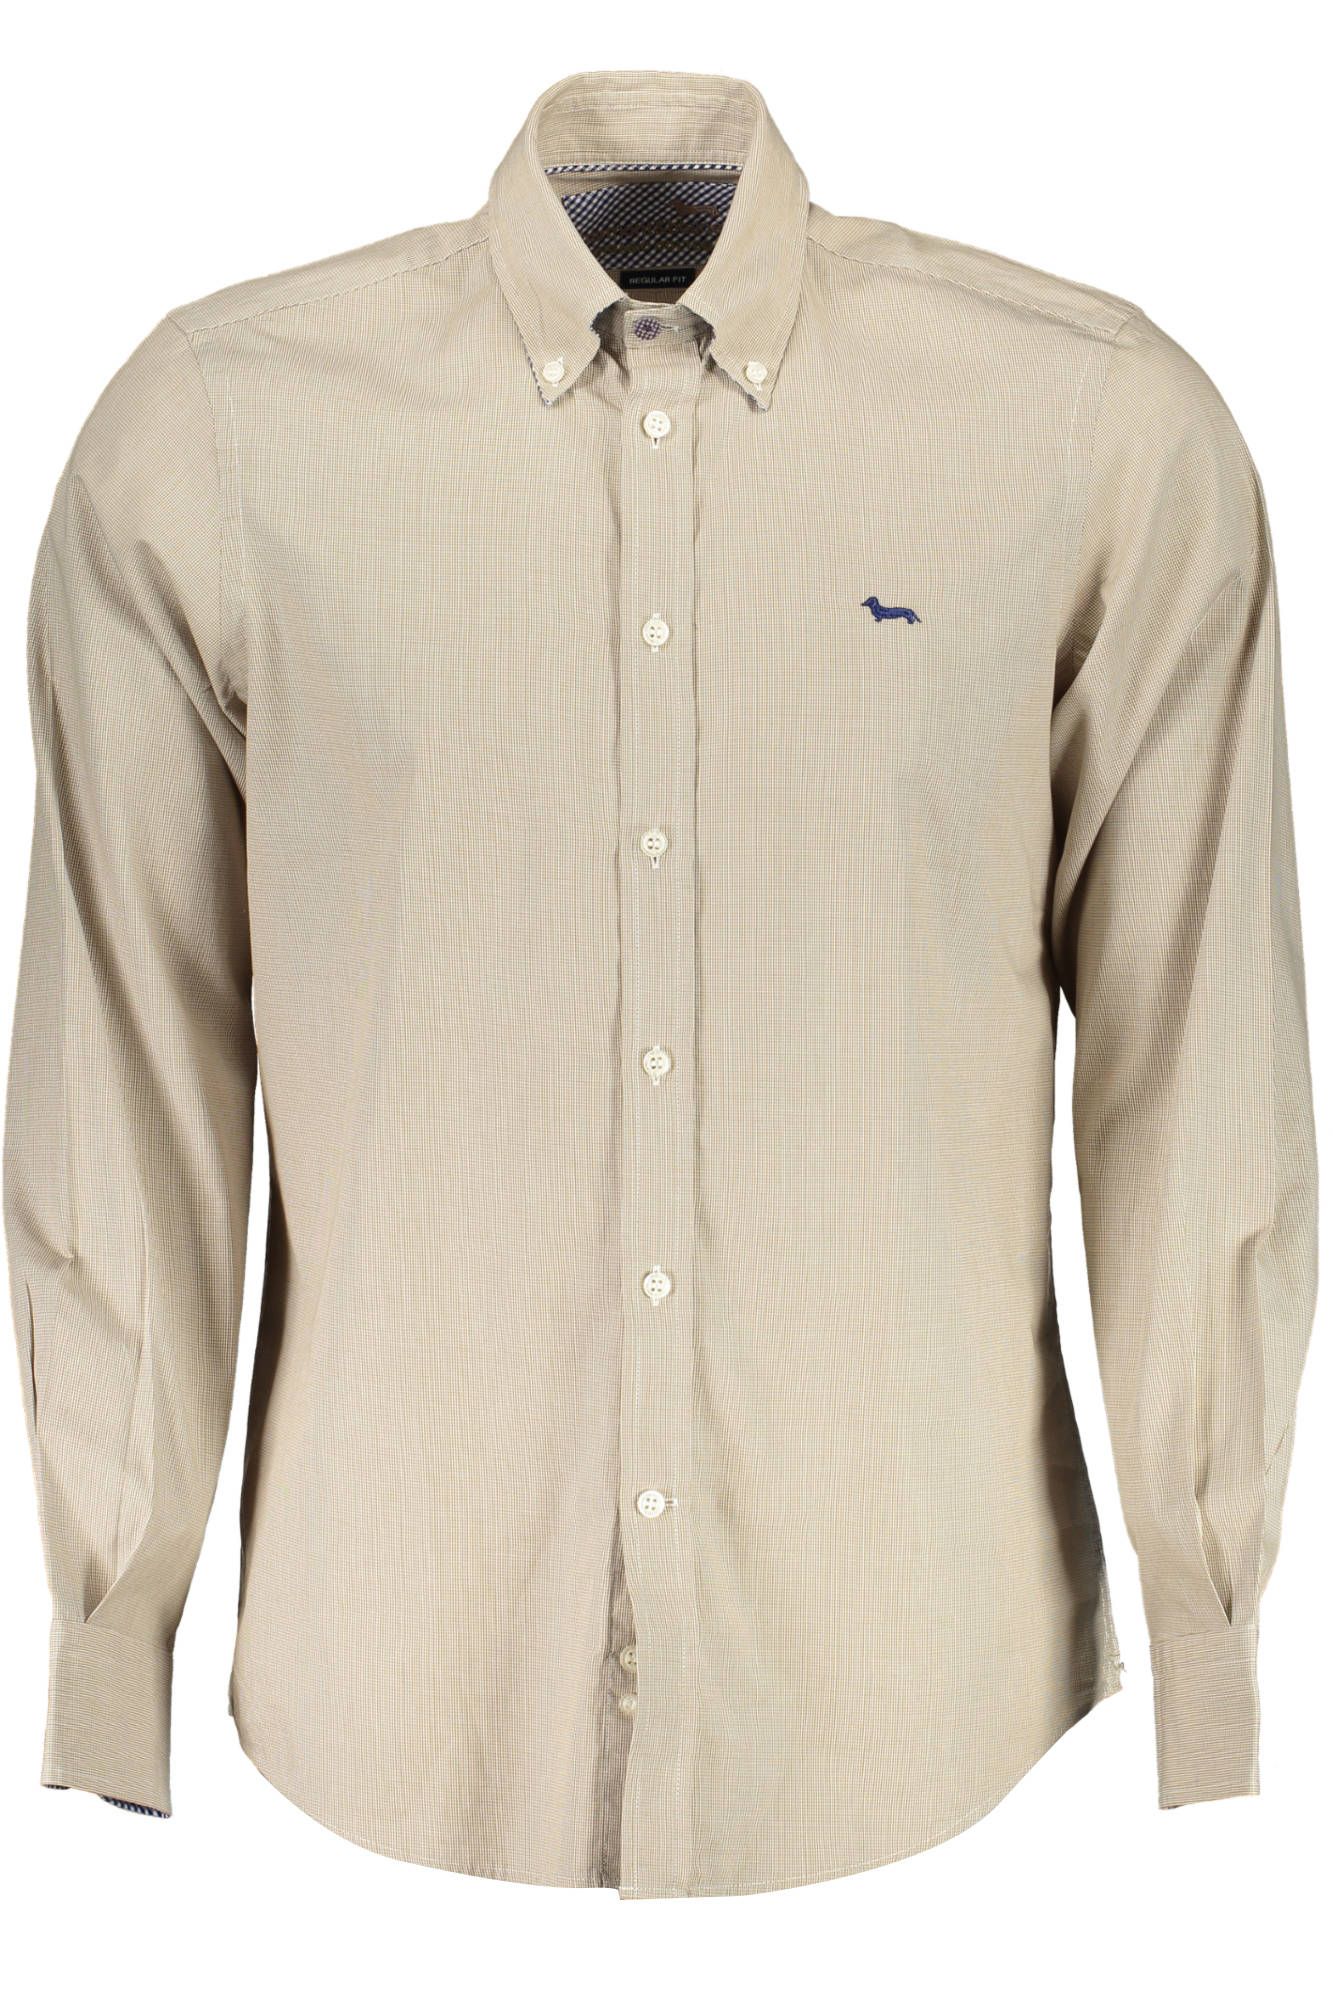 Elegant Beige Organic Cotton Shirt